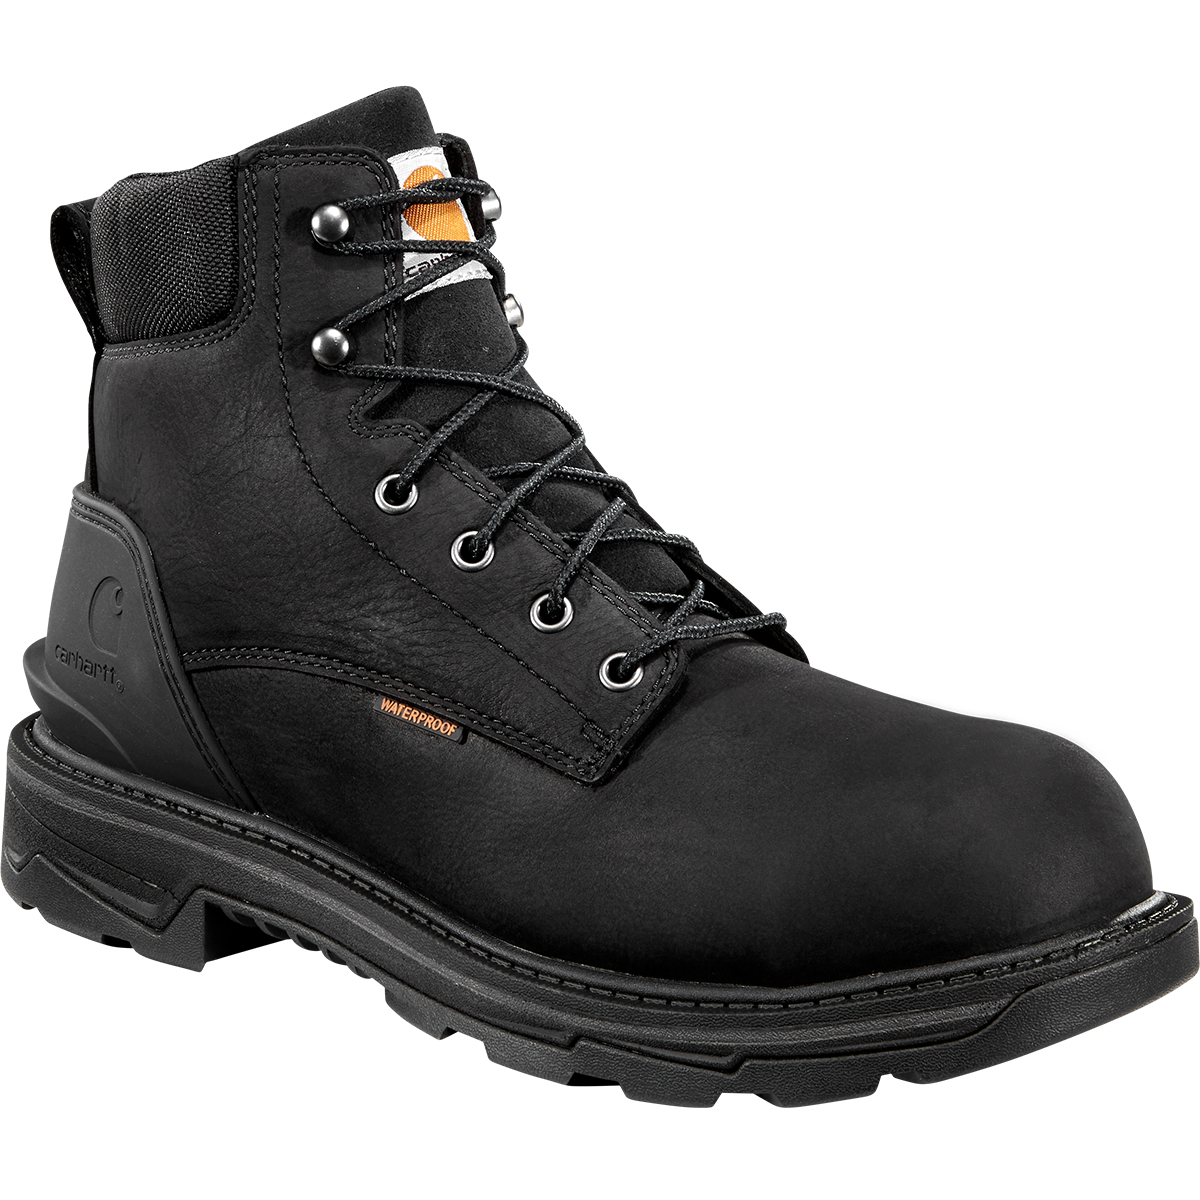 Carhartt Men's Ironwood Waterproof 6" Work Boots